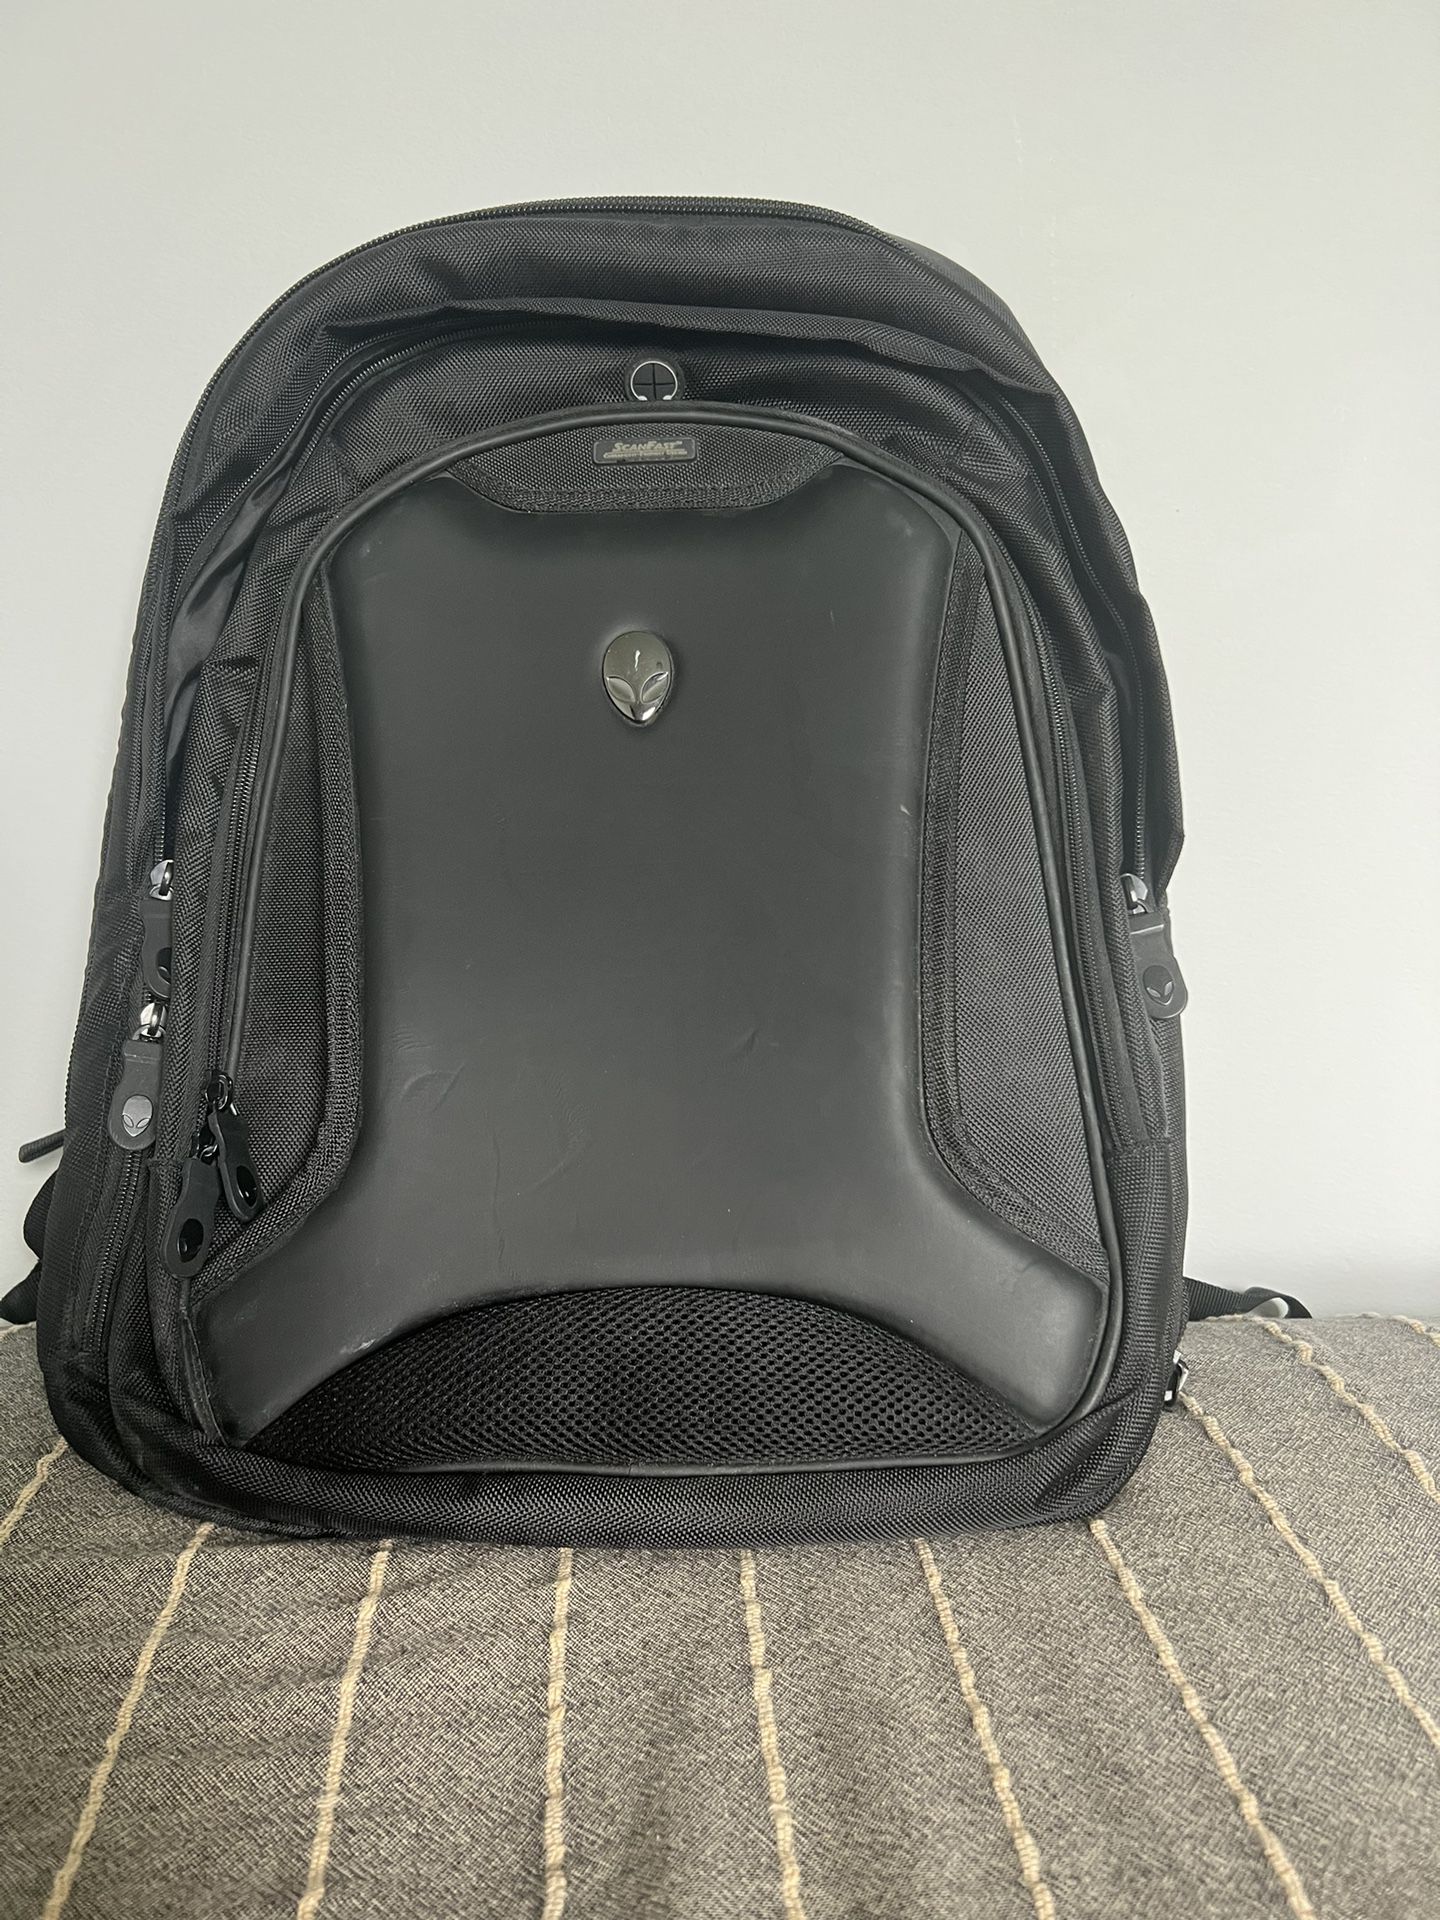 Alienware Gaming Laptop Backpack